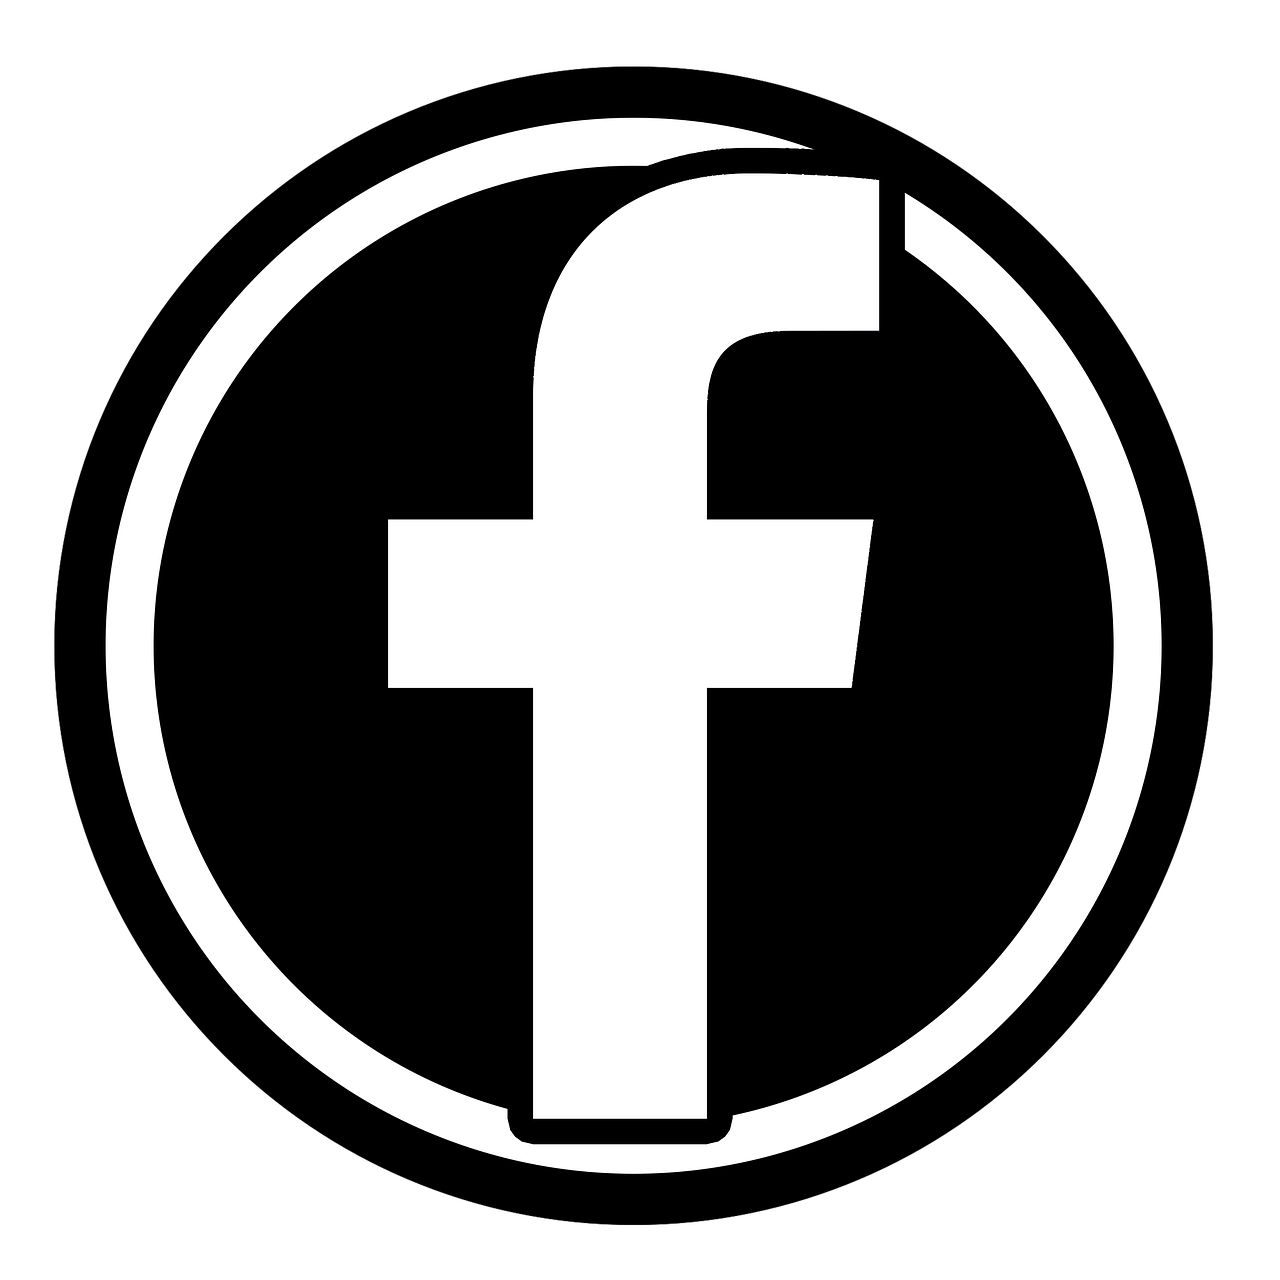 facebook logo icon free photo